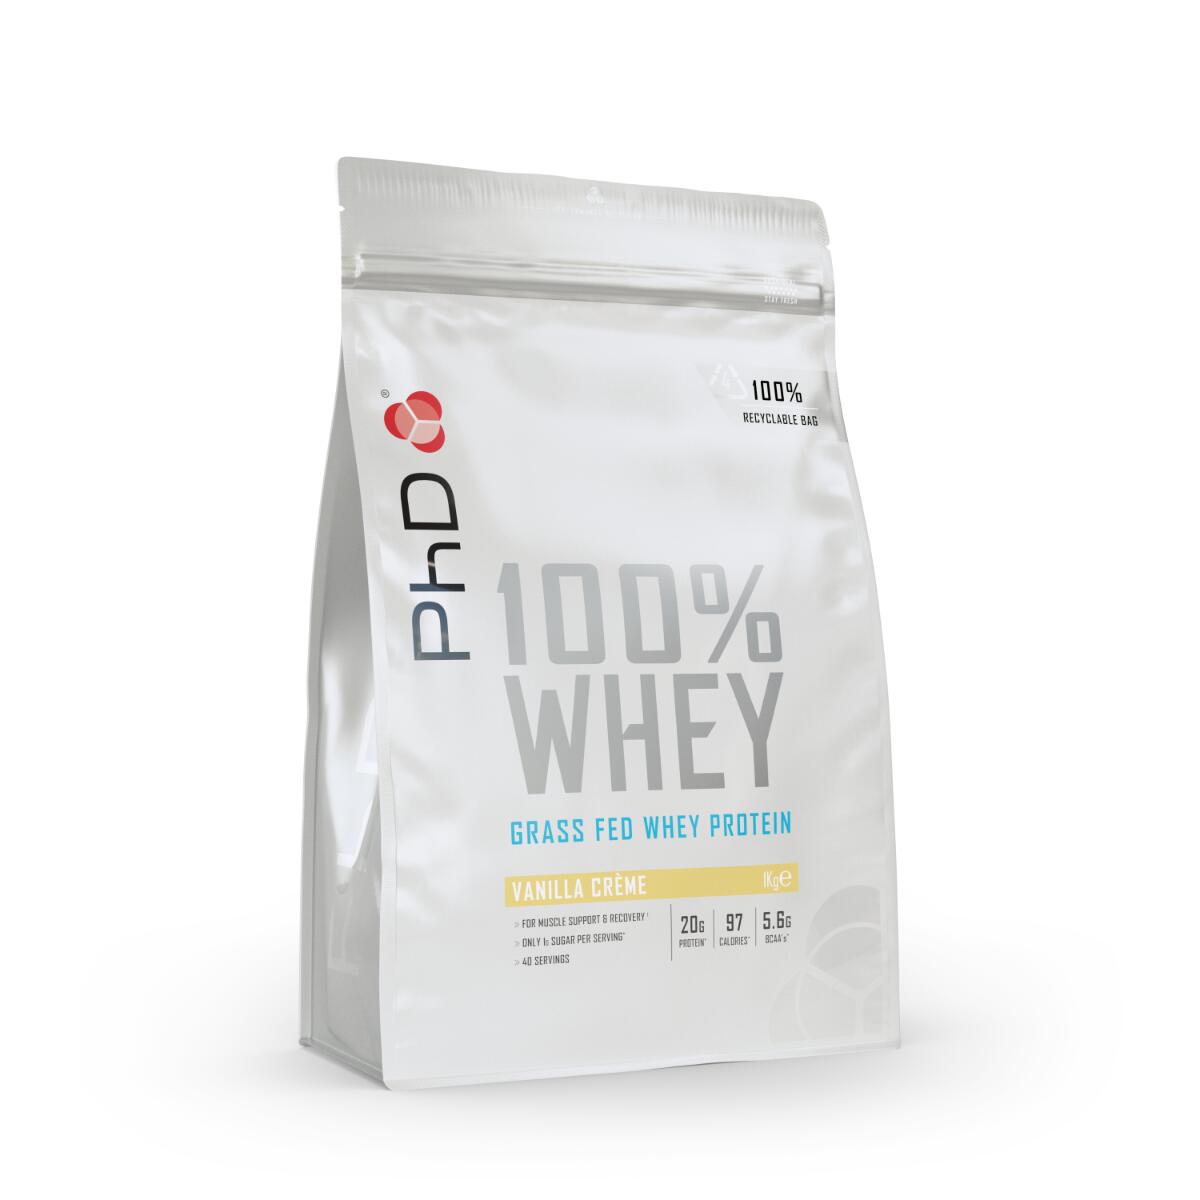 PHD NUTRITION PhD Nutrition | 100% Whey Powder | Vanilla Creme Flavour | 1kg